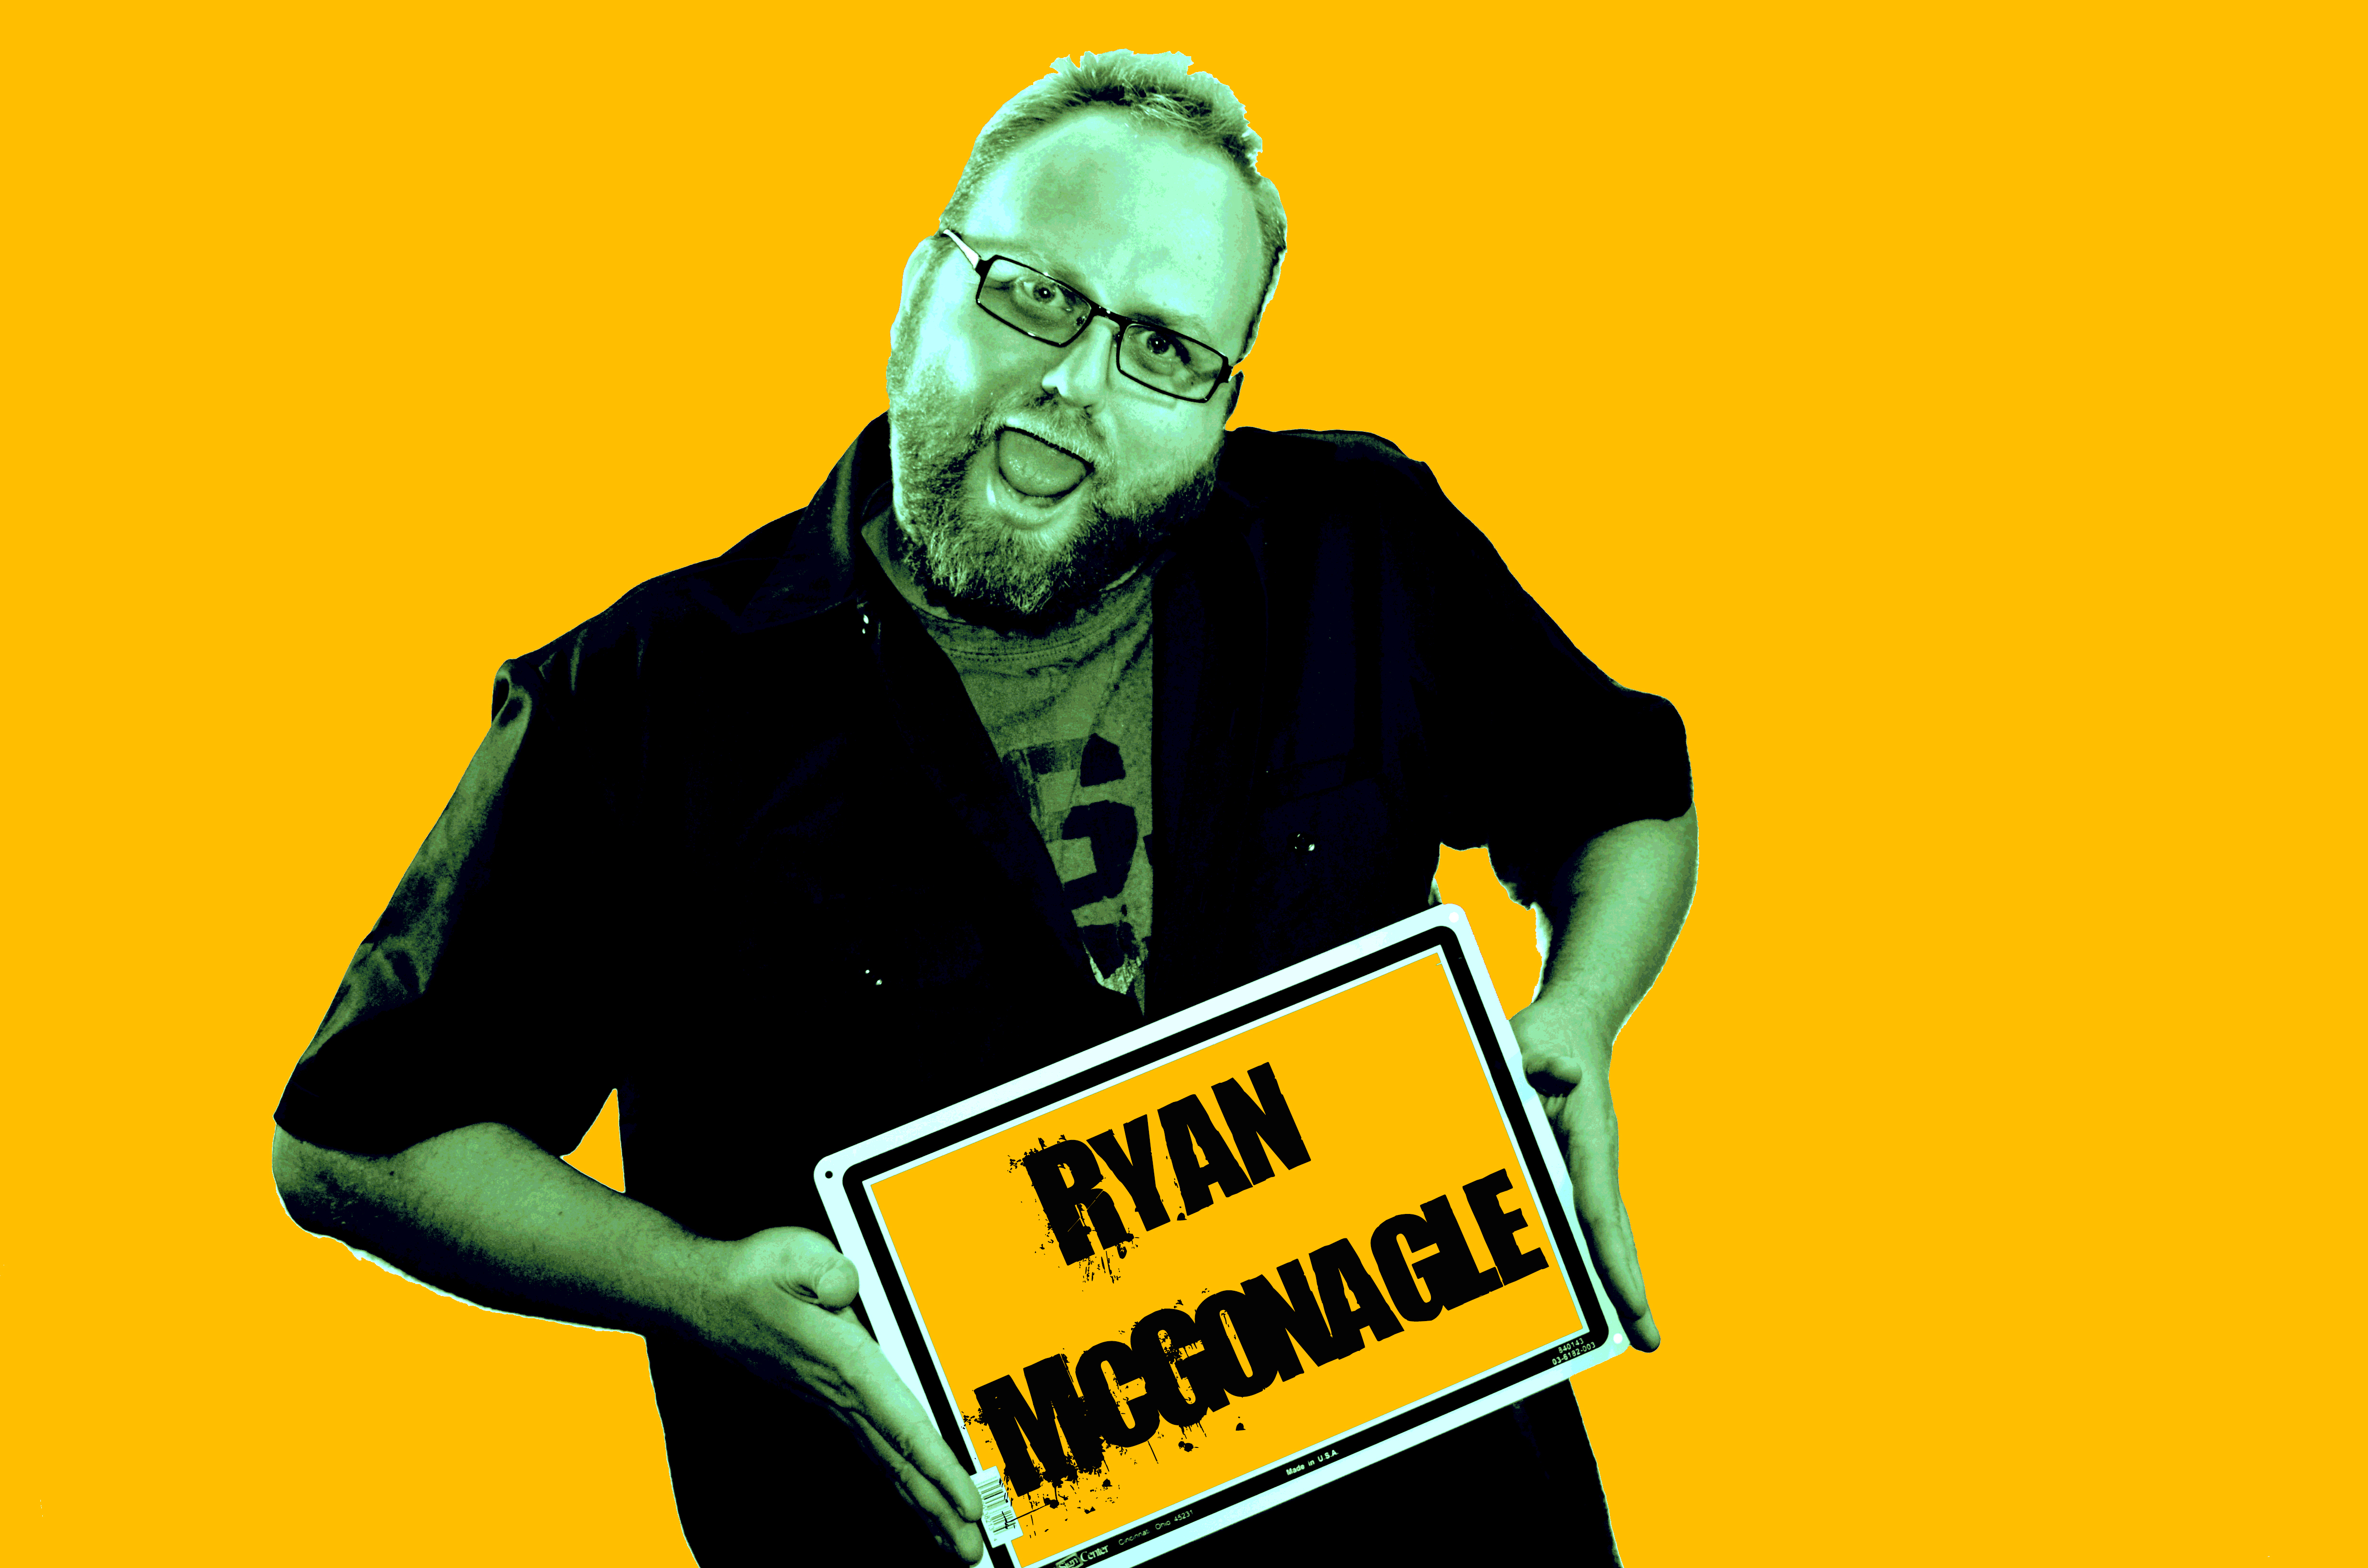 Comedy Writer and Producer Ryan McGonagle 2013